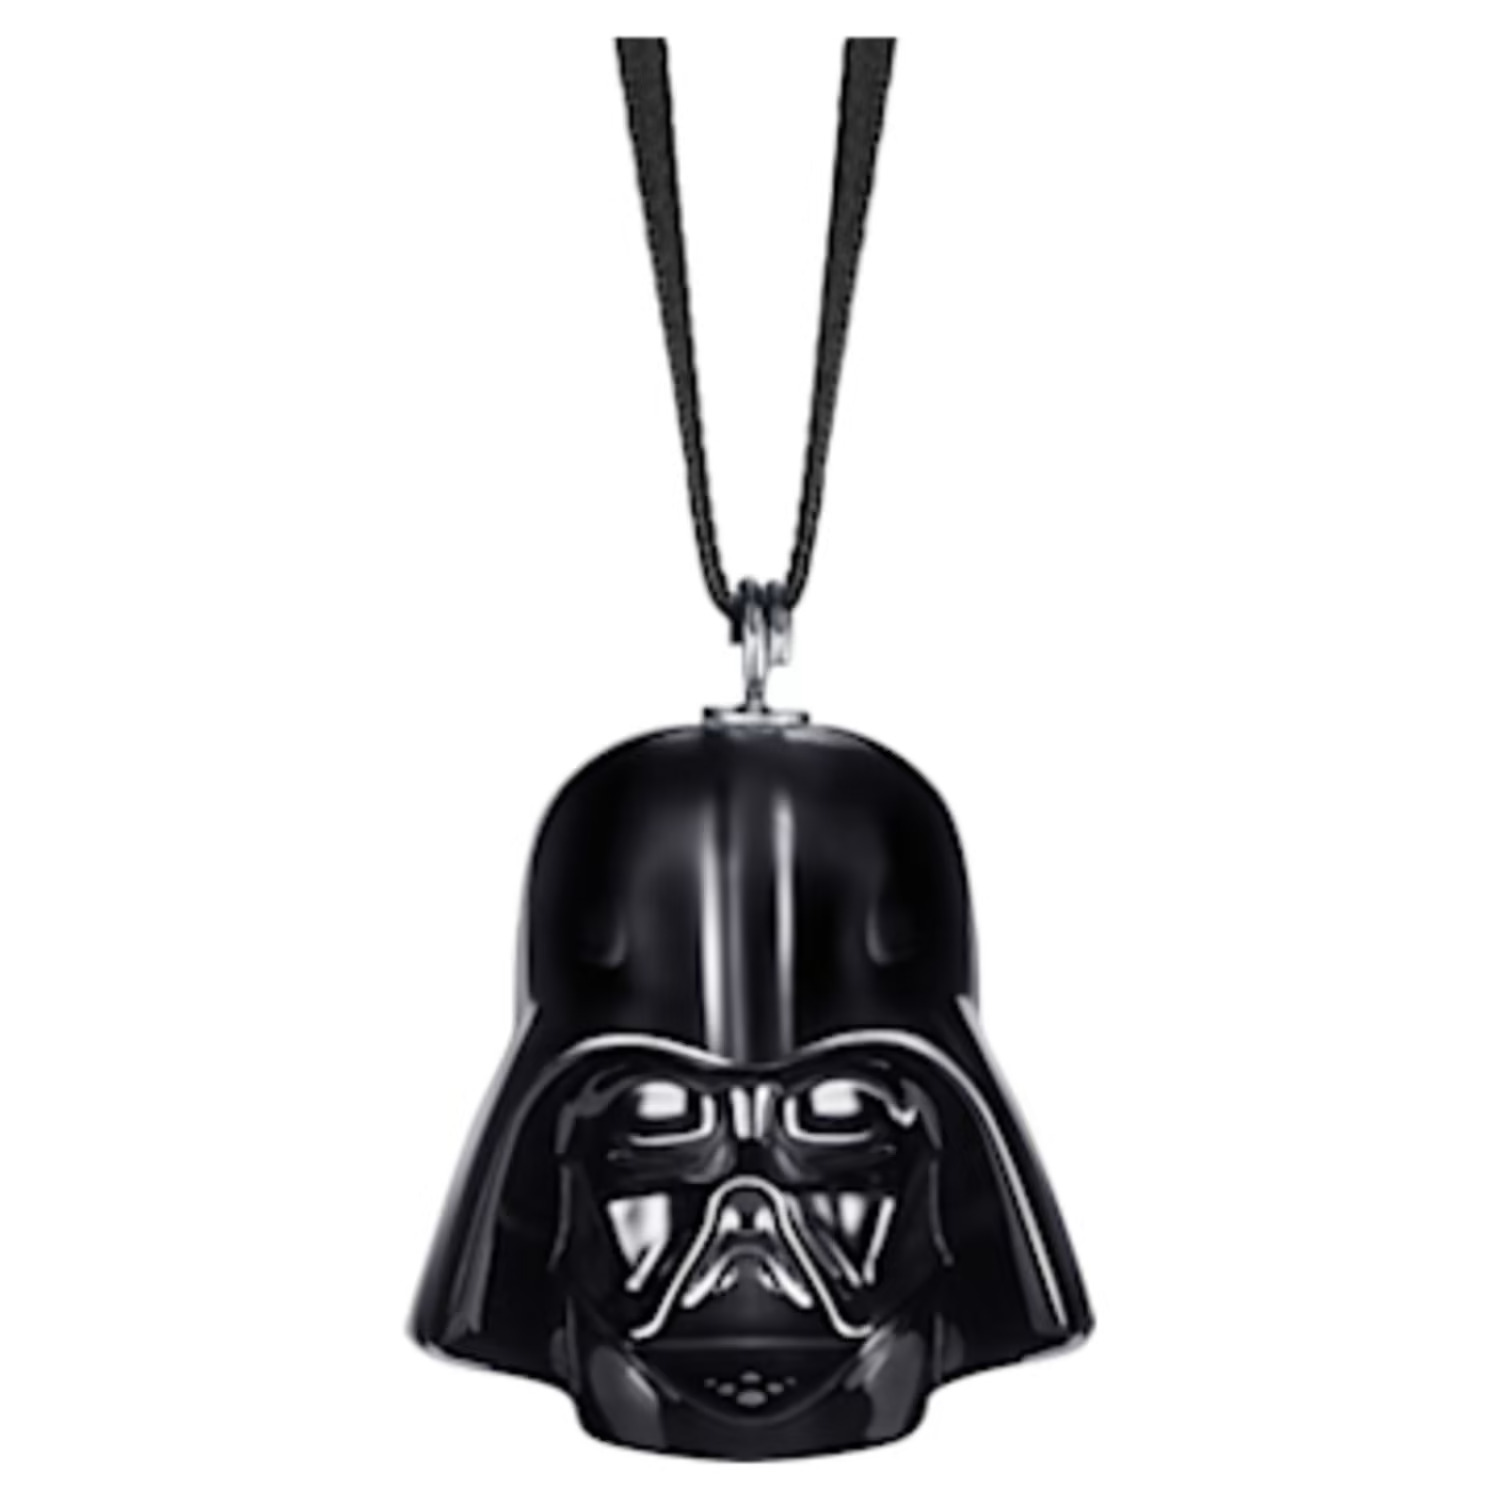 Swarovski Death Vader Helmet Ornament Star Wars PWP #5530491 New in Box 2019